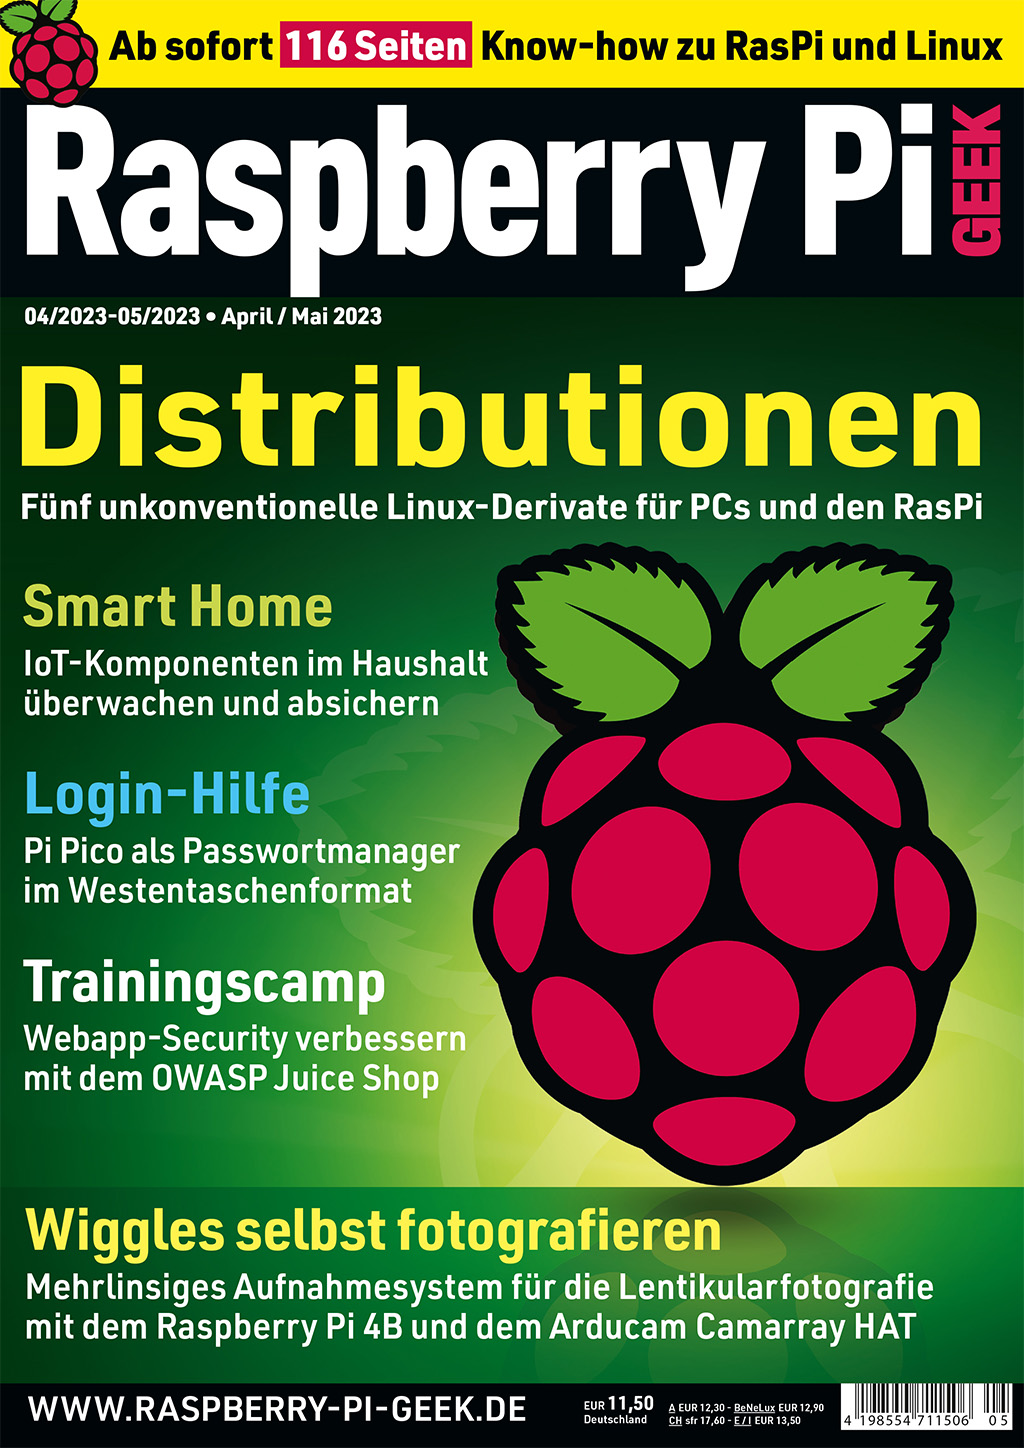 Probeabo: Raspberry Pi Geek Digital-Ausgabe